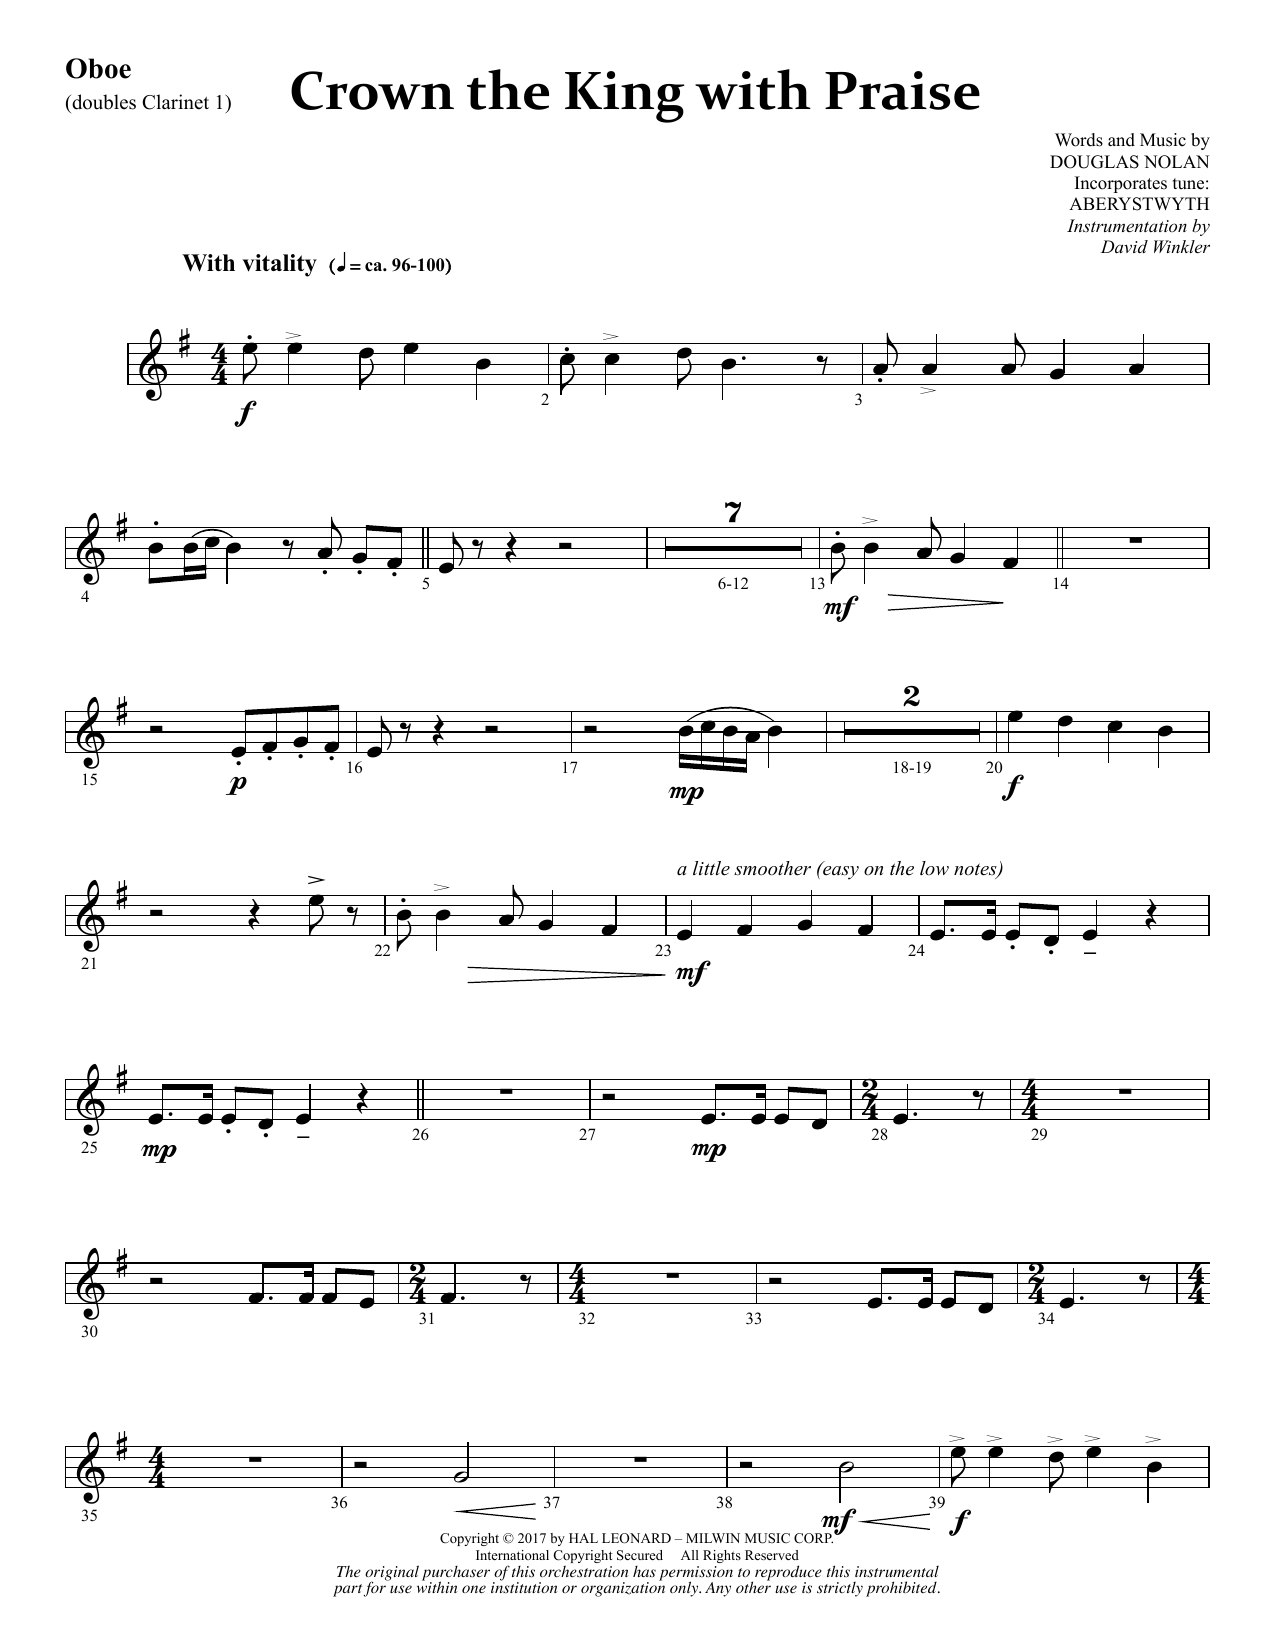 Douglas Nolan Crown the King with Praise - Oboe (dbl. Clarinet 1) Sheet Music Notes & Chords for Choral Instrumental Pak - Download or Print PDF